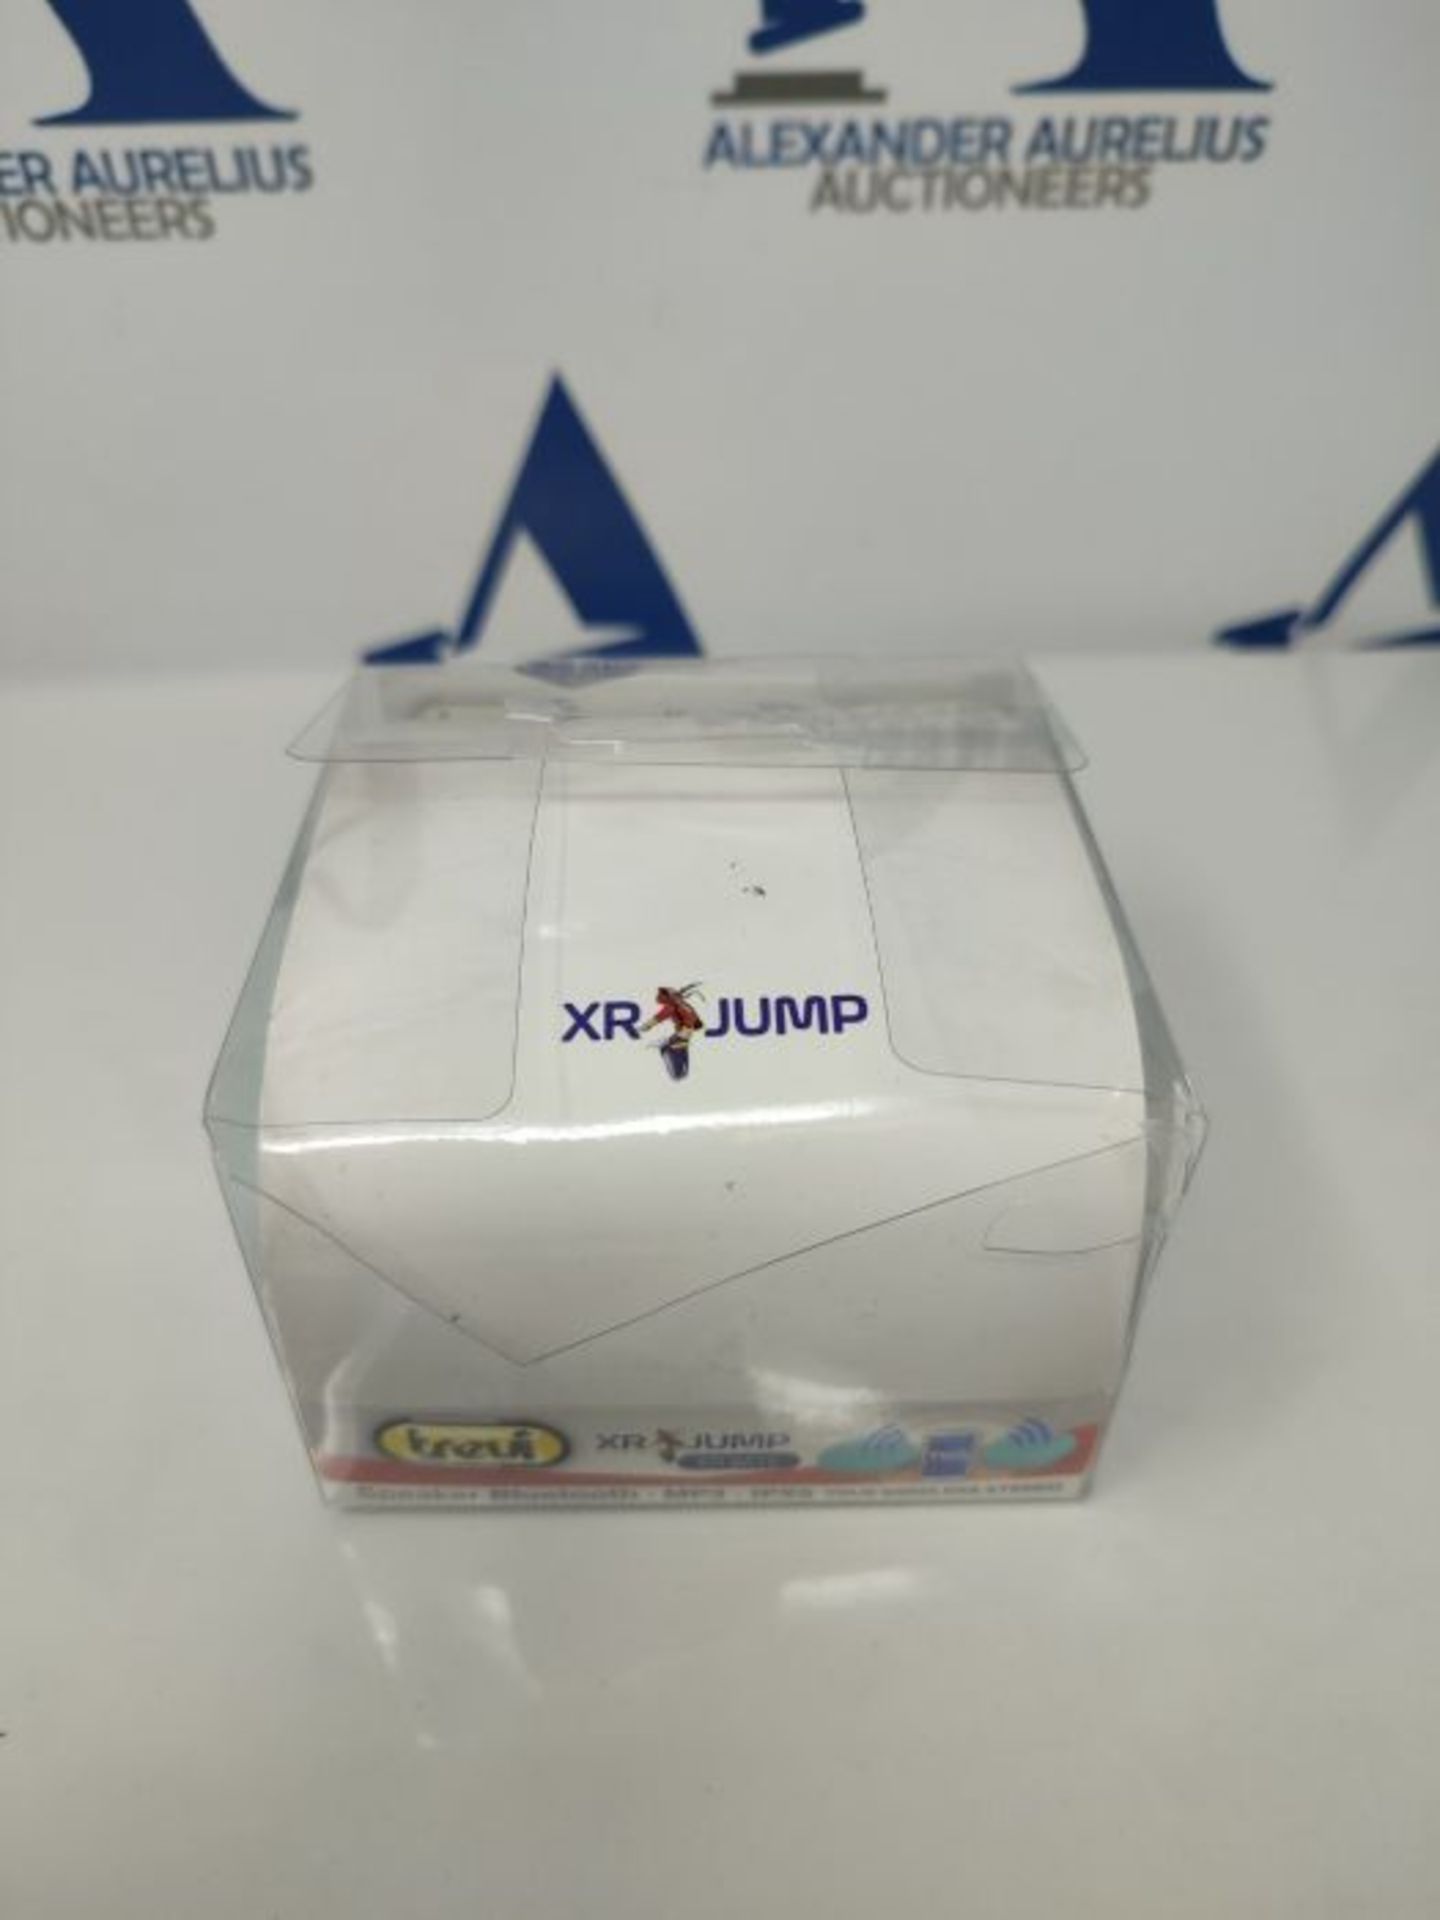 Trevi XR JUMP XR 8A15 Altoparlante Speaker Amplificato con Mp3, Aux-In, Micro-SD, Blue - Image 2 of 3